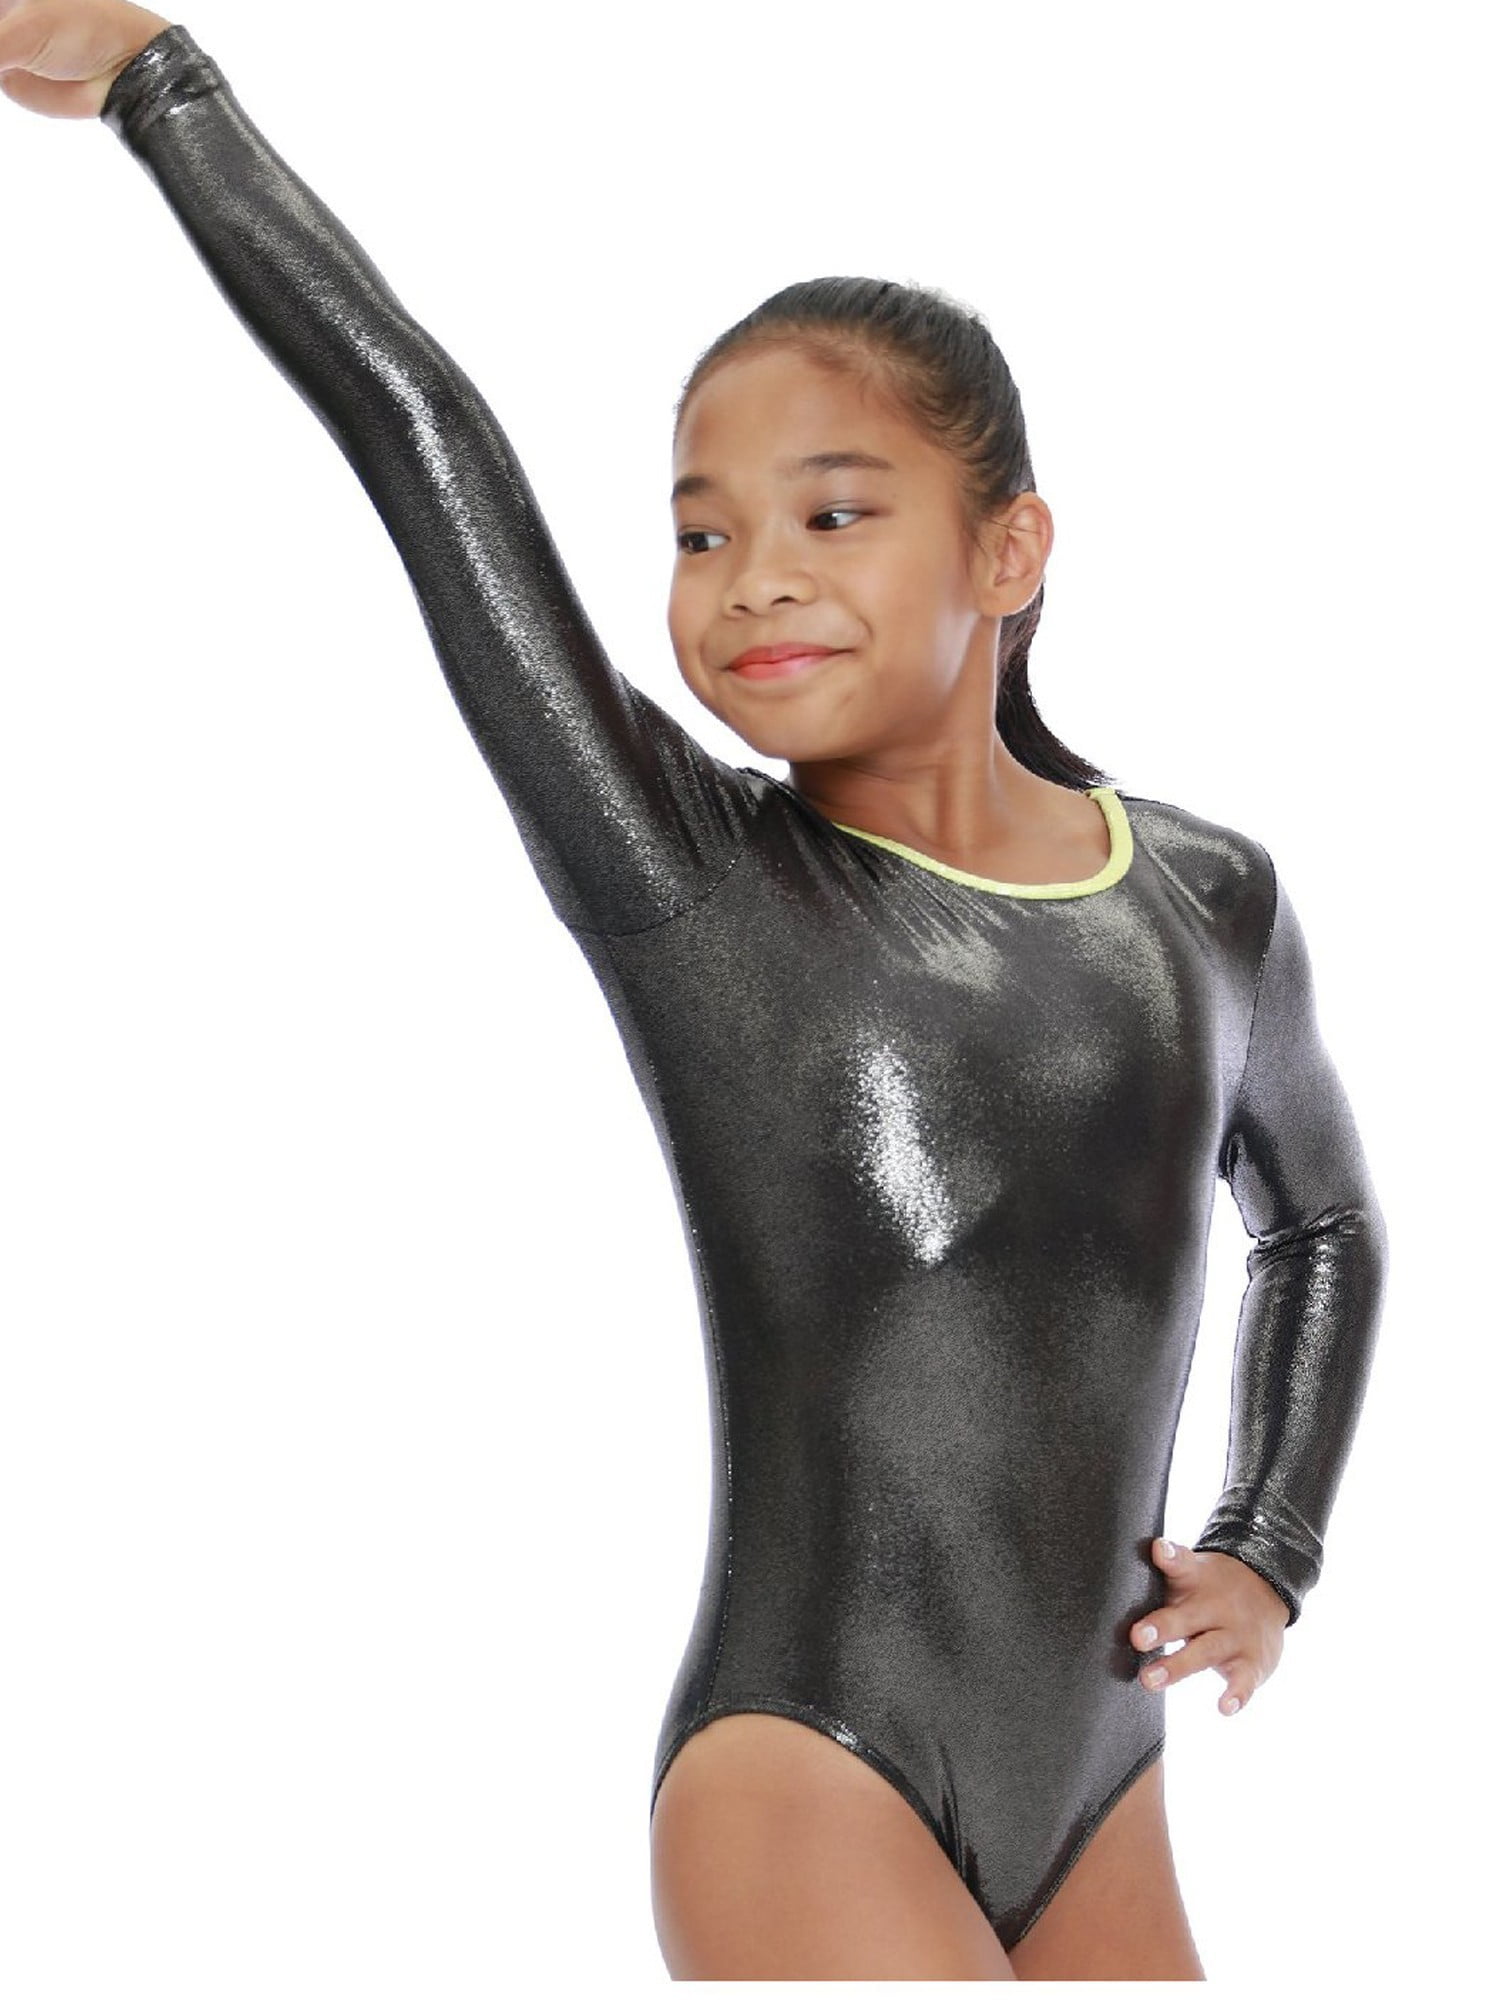 Kidsparadisy Leotard for Girls Gymnastics Camisole Tank Dance Clothes Shiny Pretty 